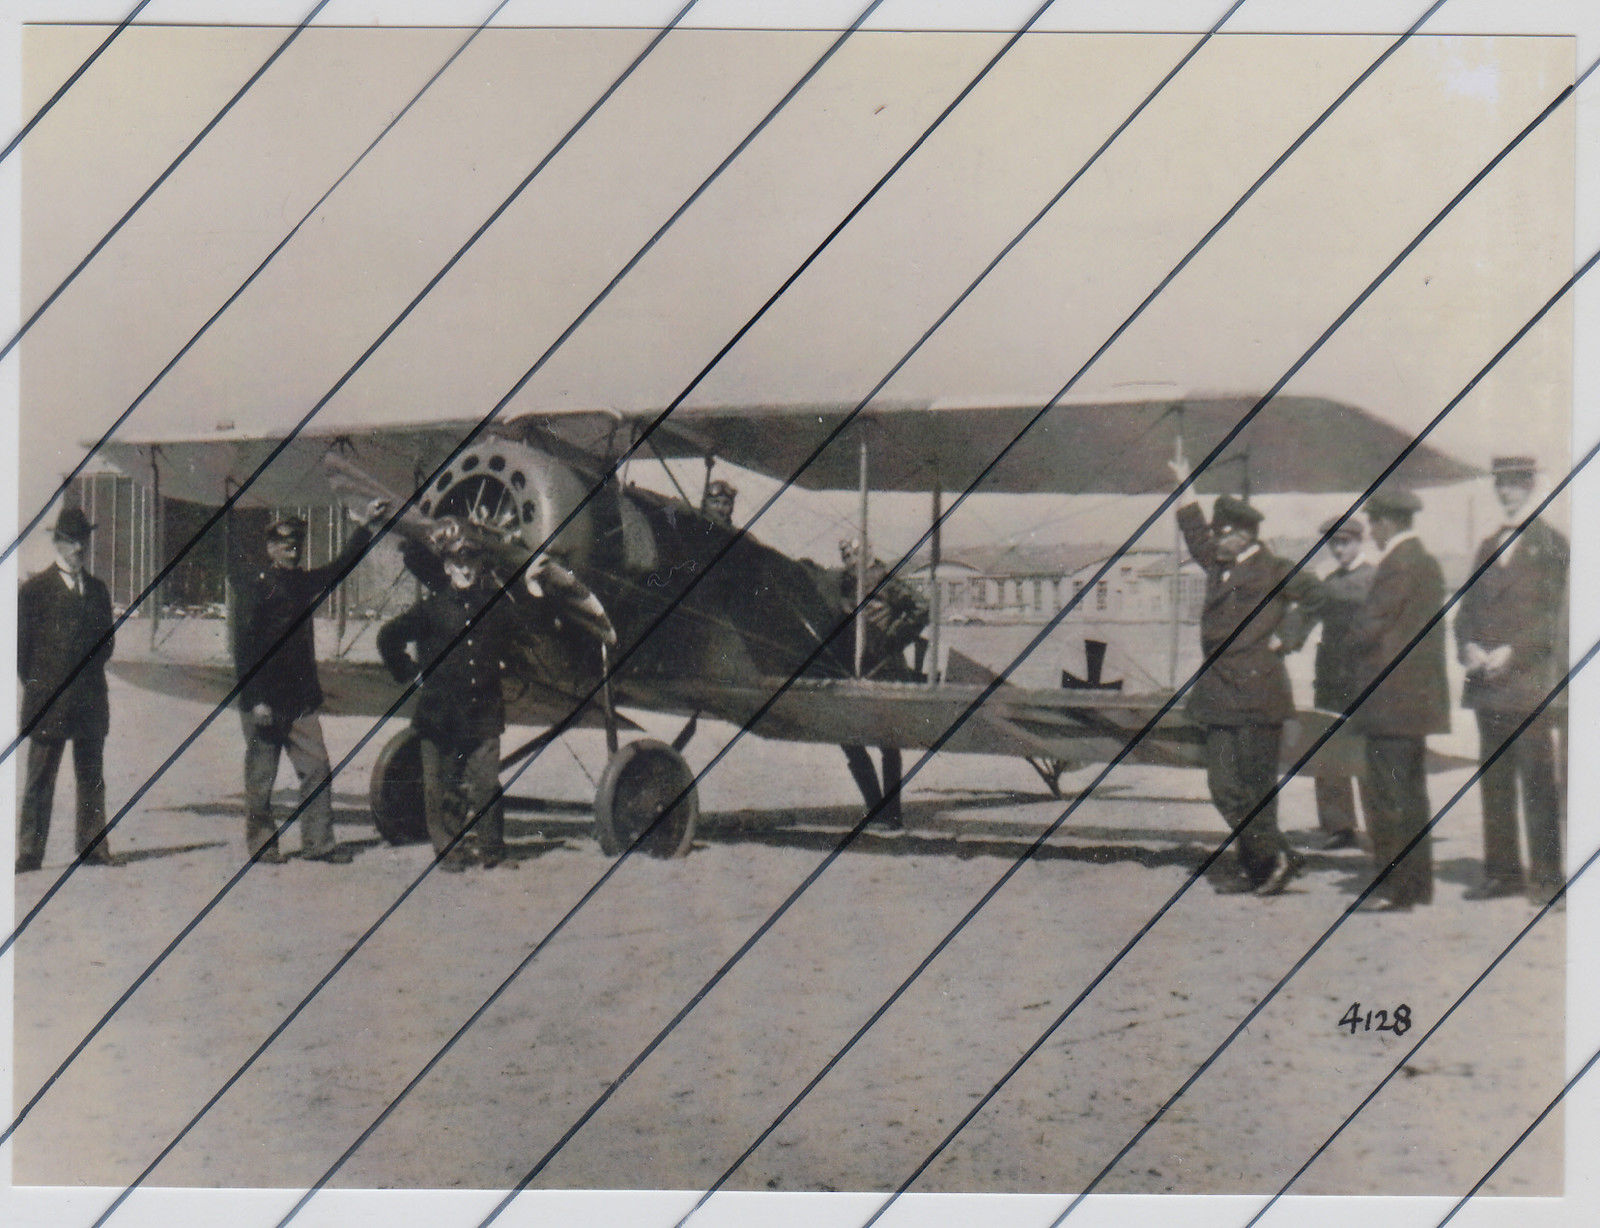 Naam: Foto Flugzeug Fokker D.III avion aircraft plane german.jpg
Bekeken: 578
Grootte: 323,1 KB